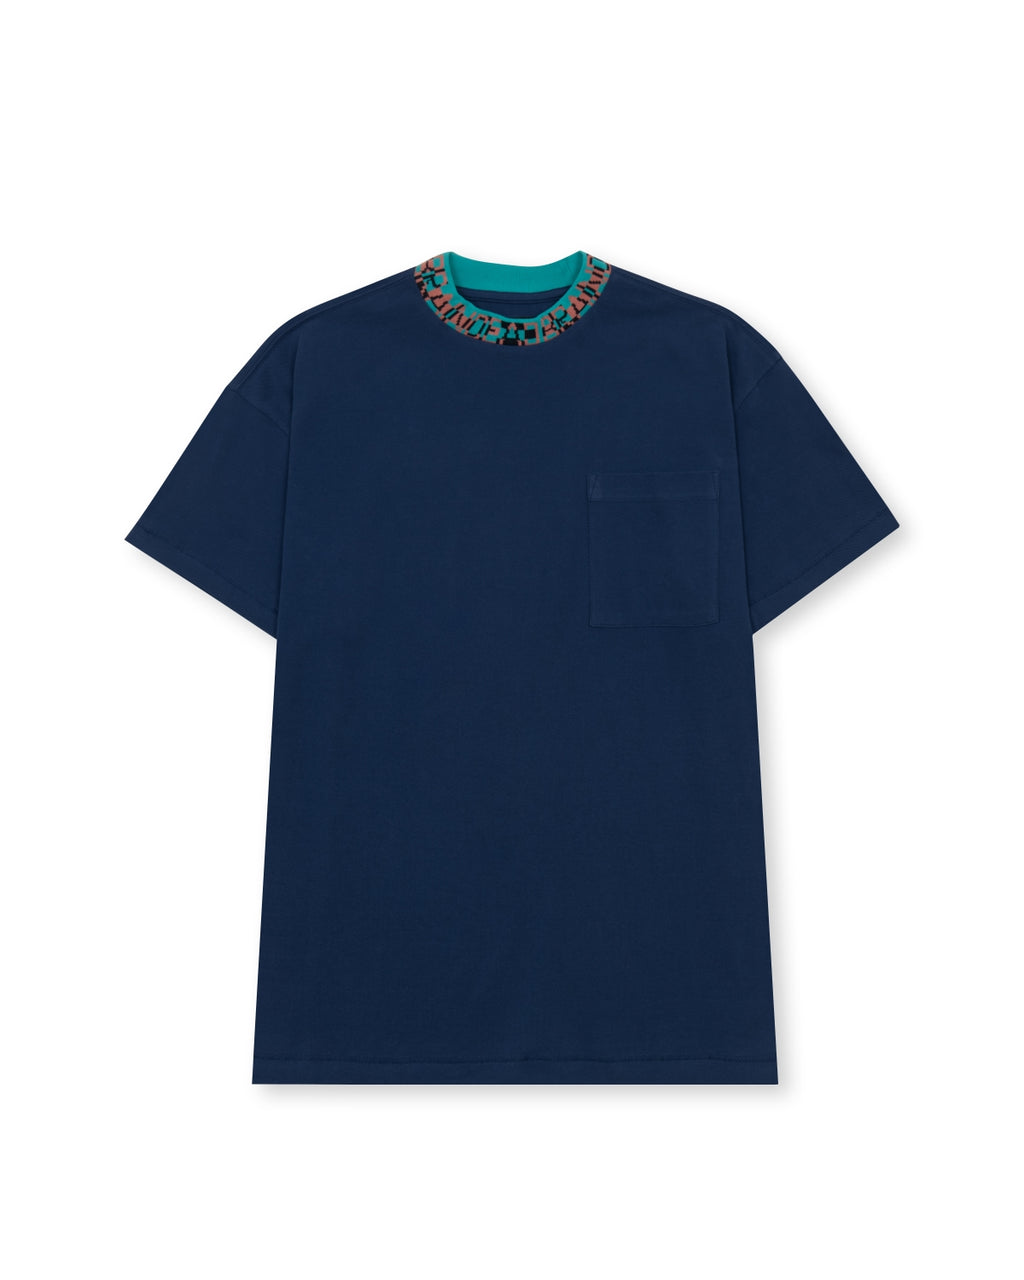 Jacquarded Collar Pique Mock Neck Shirt - Navy